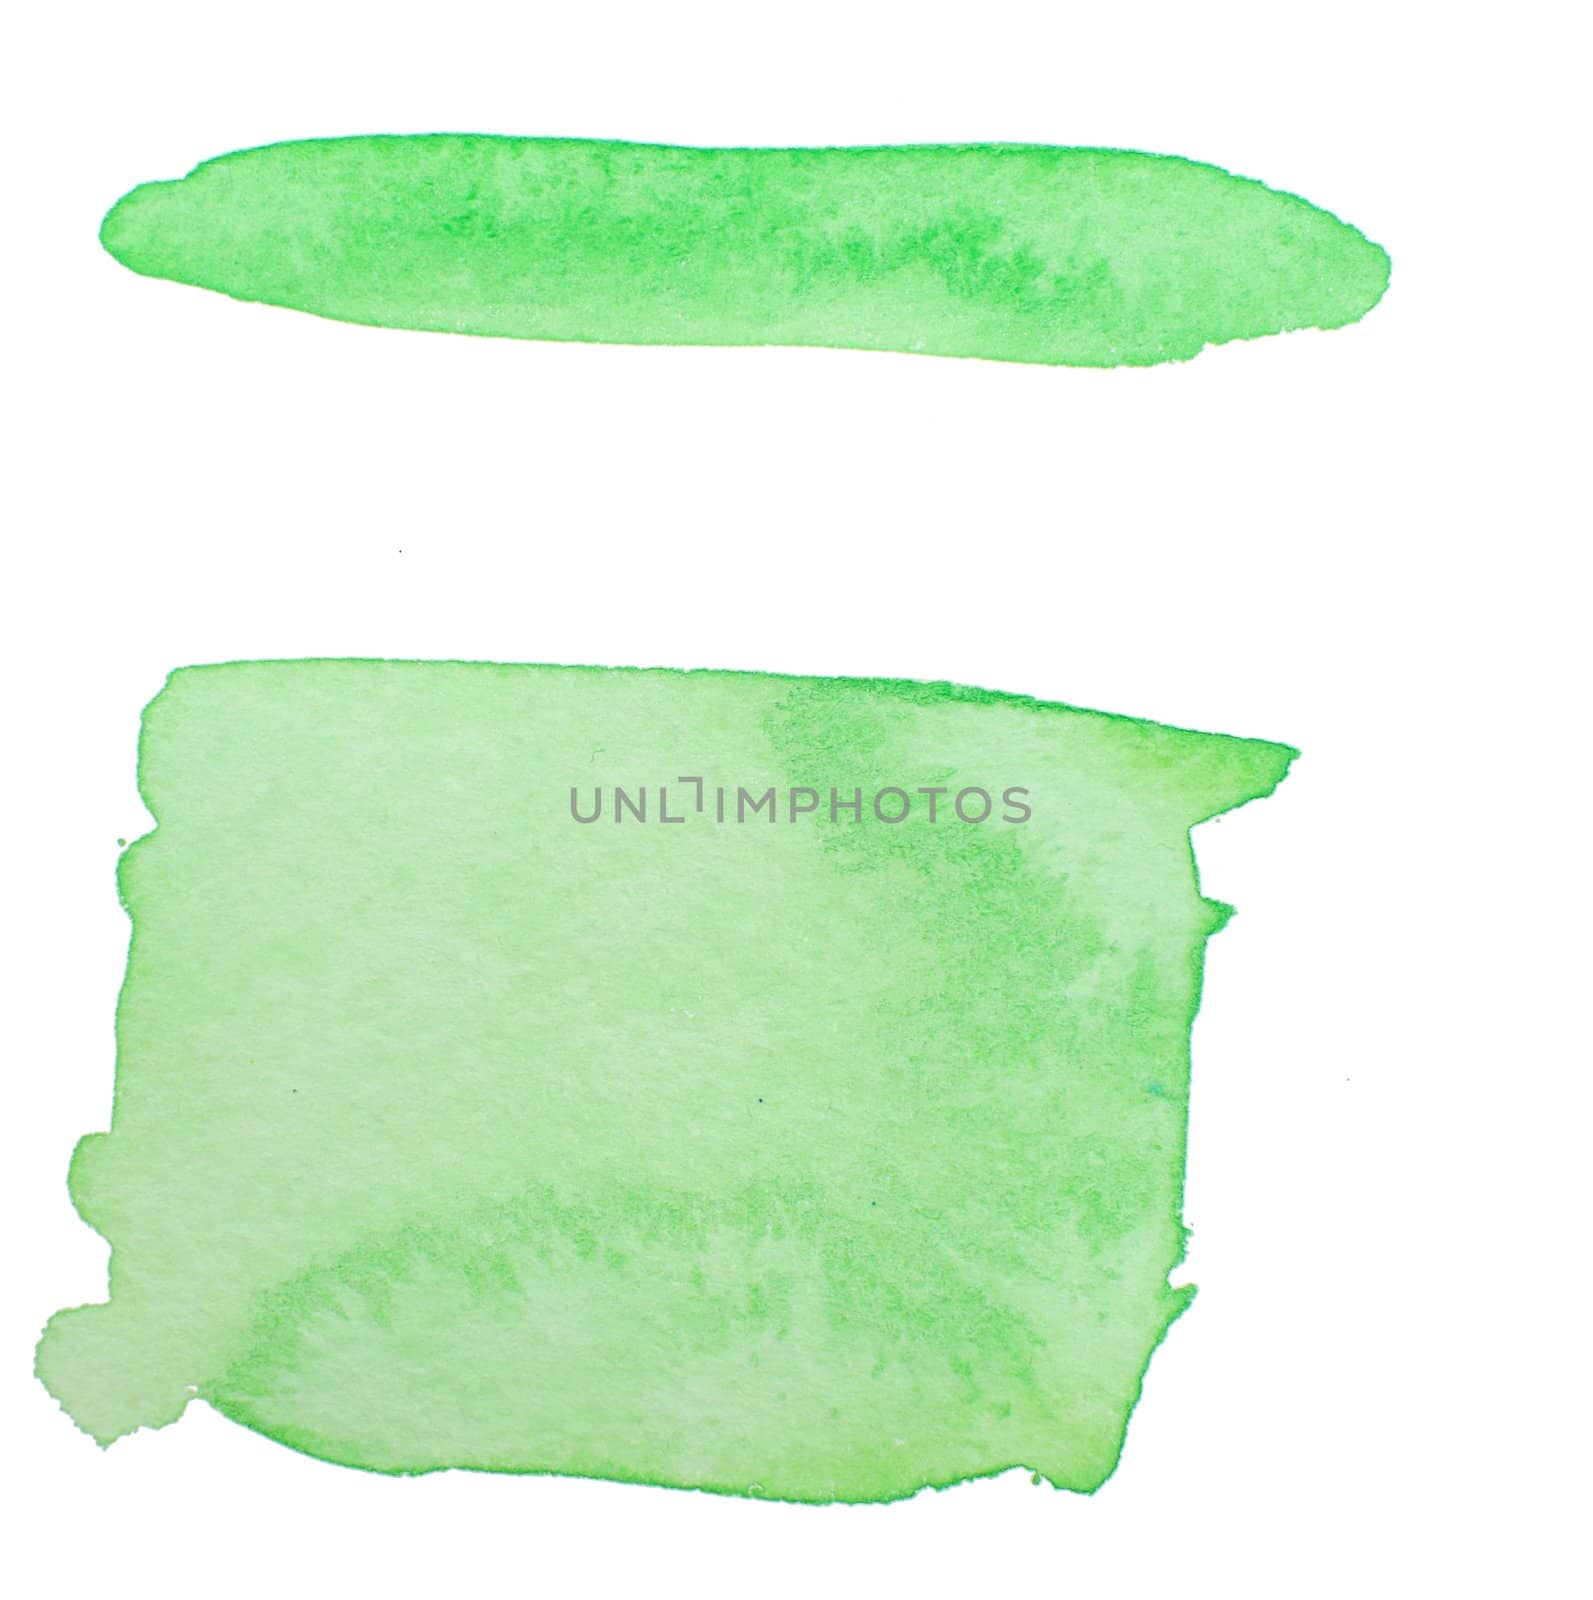 An image of light green aquarelle paint